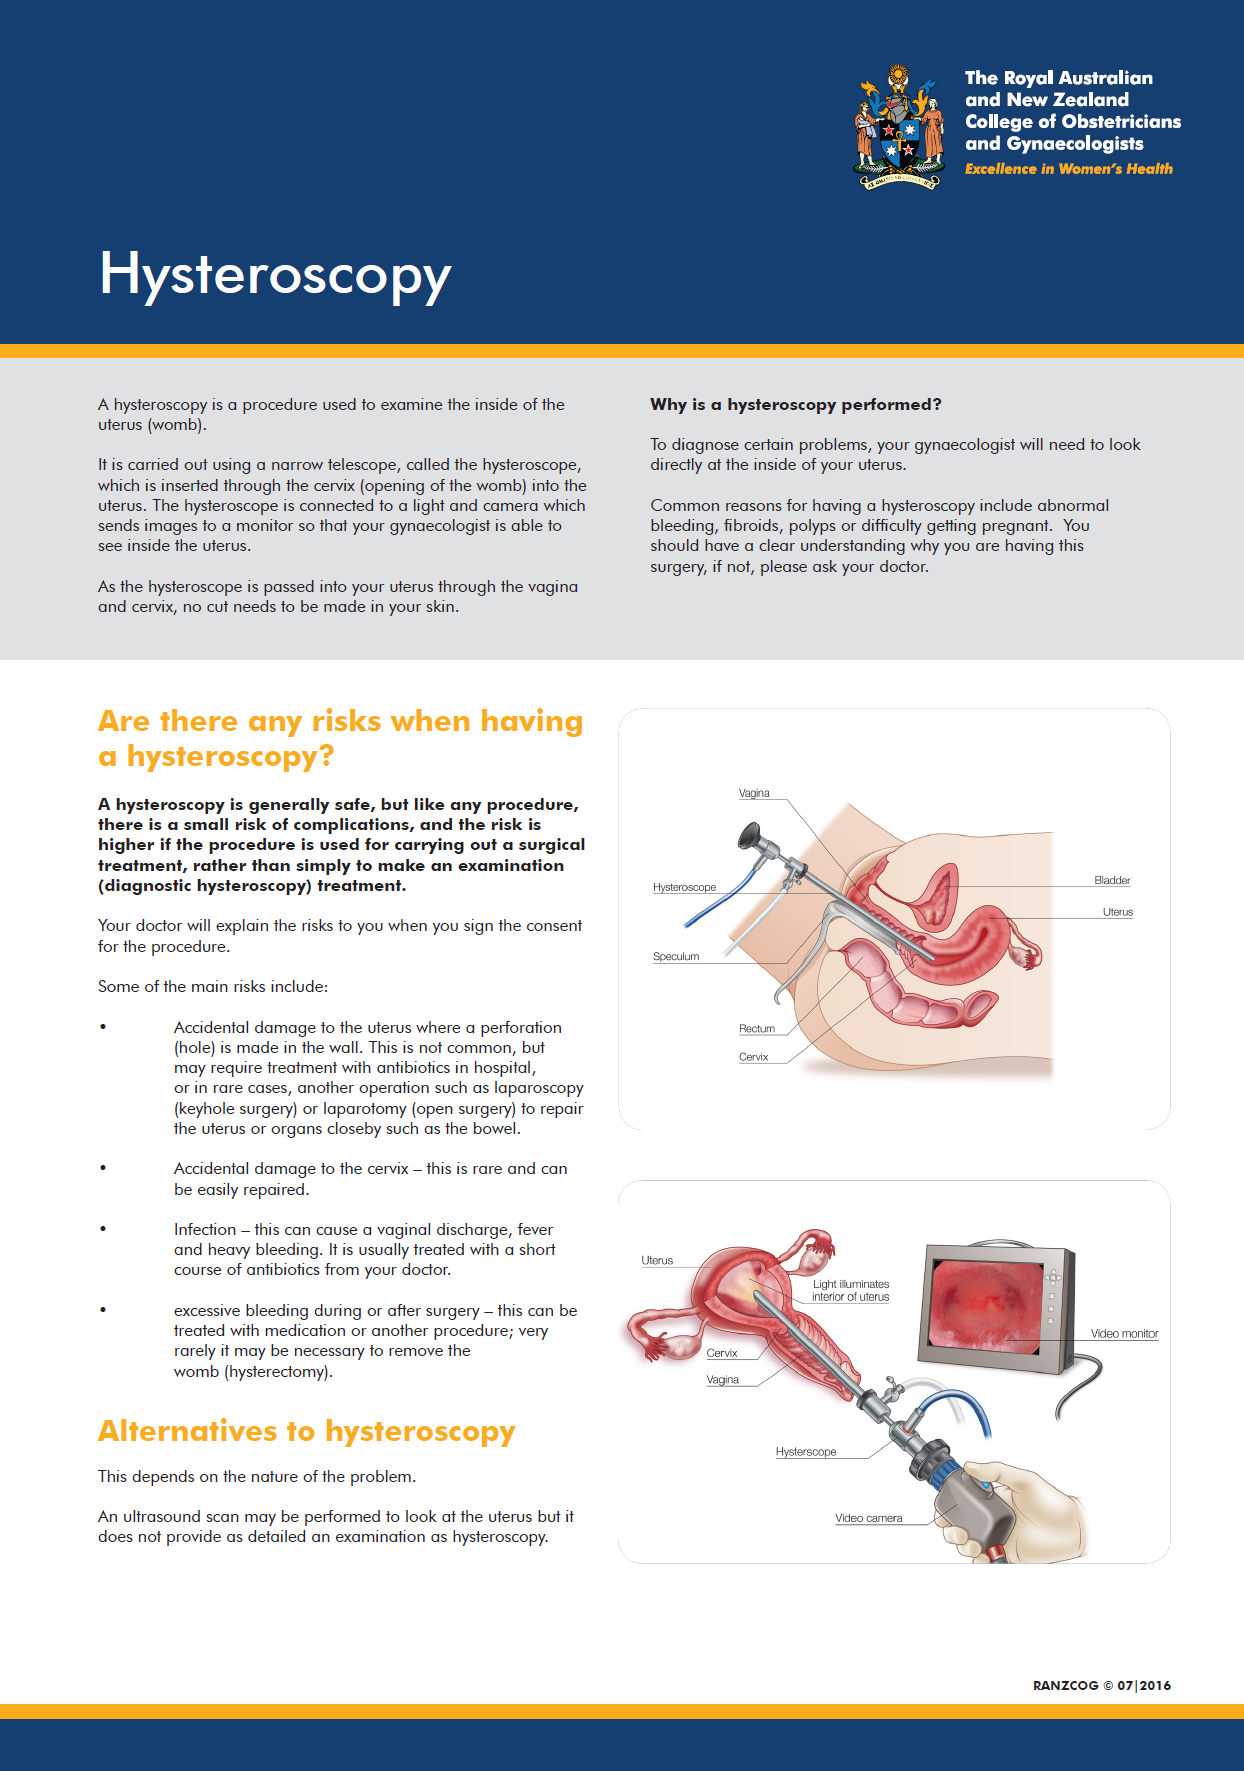 Hysteroscopy.png